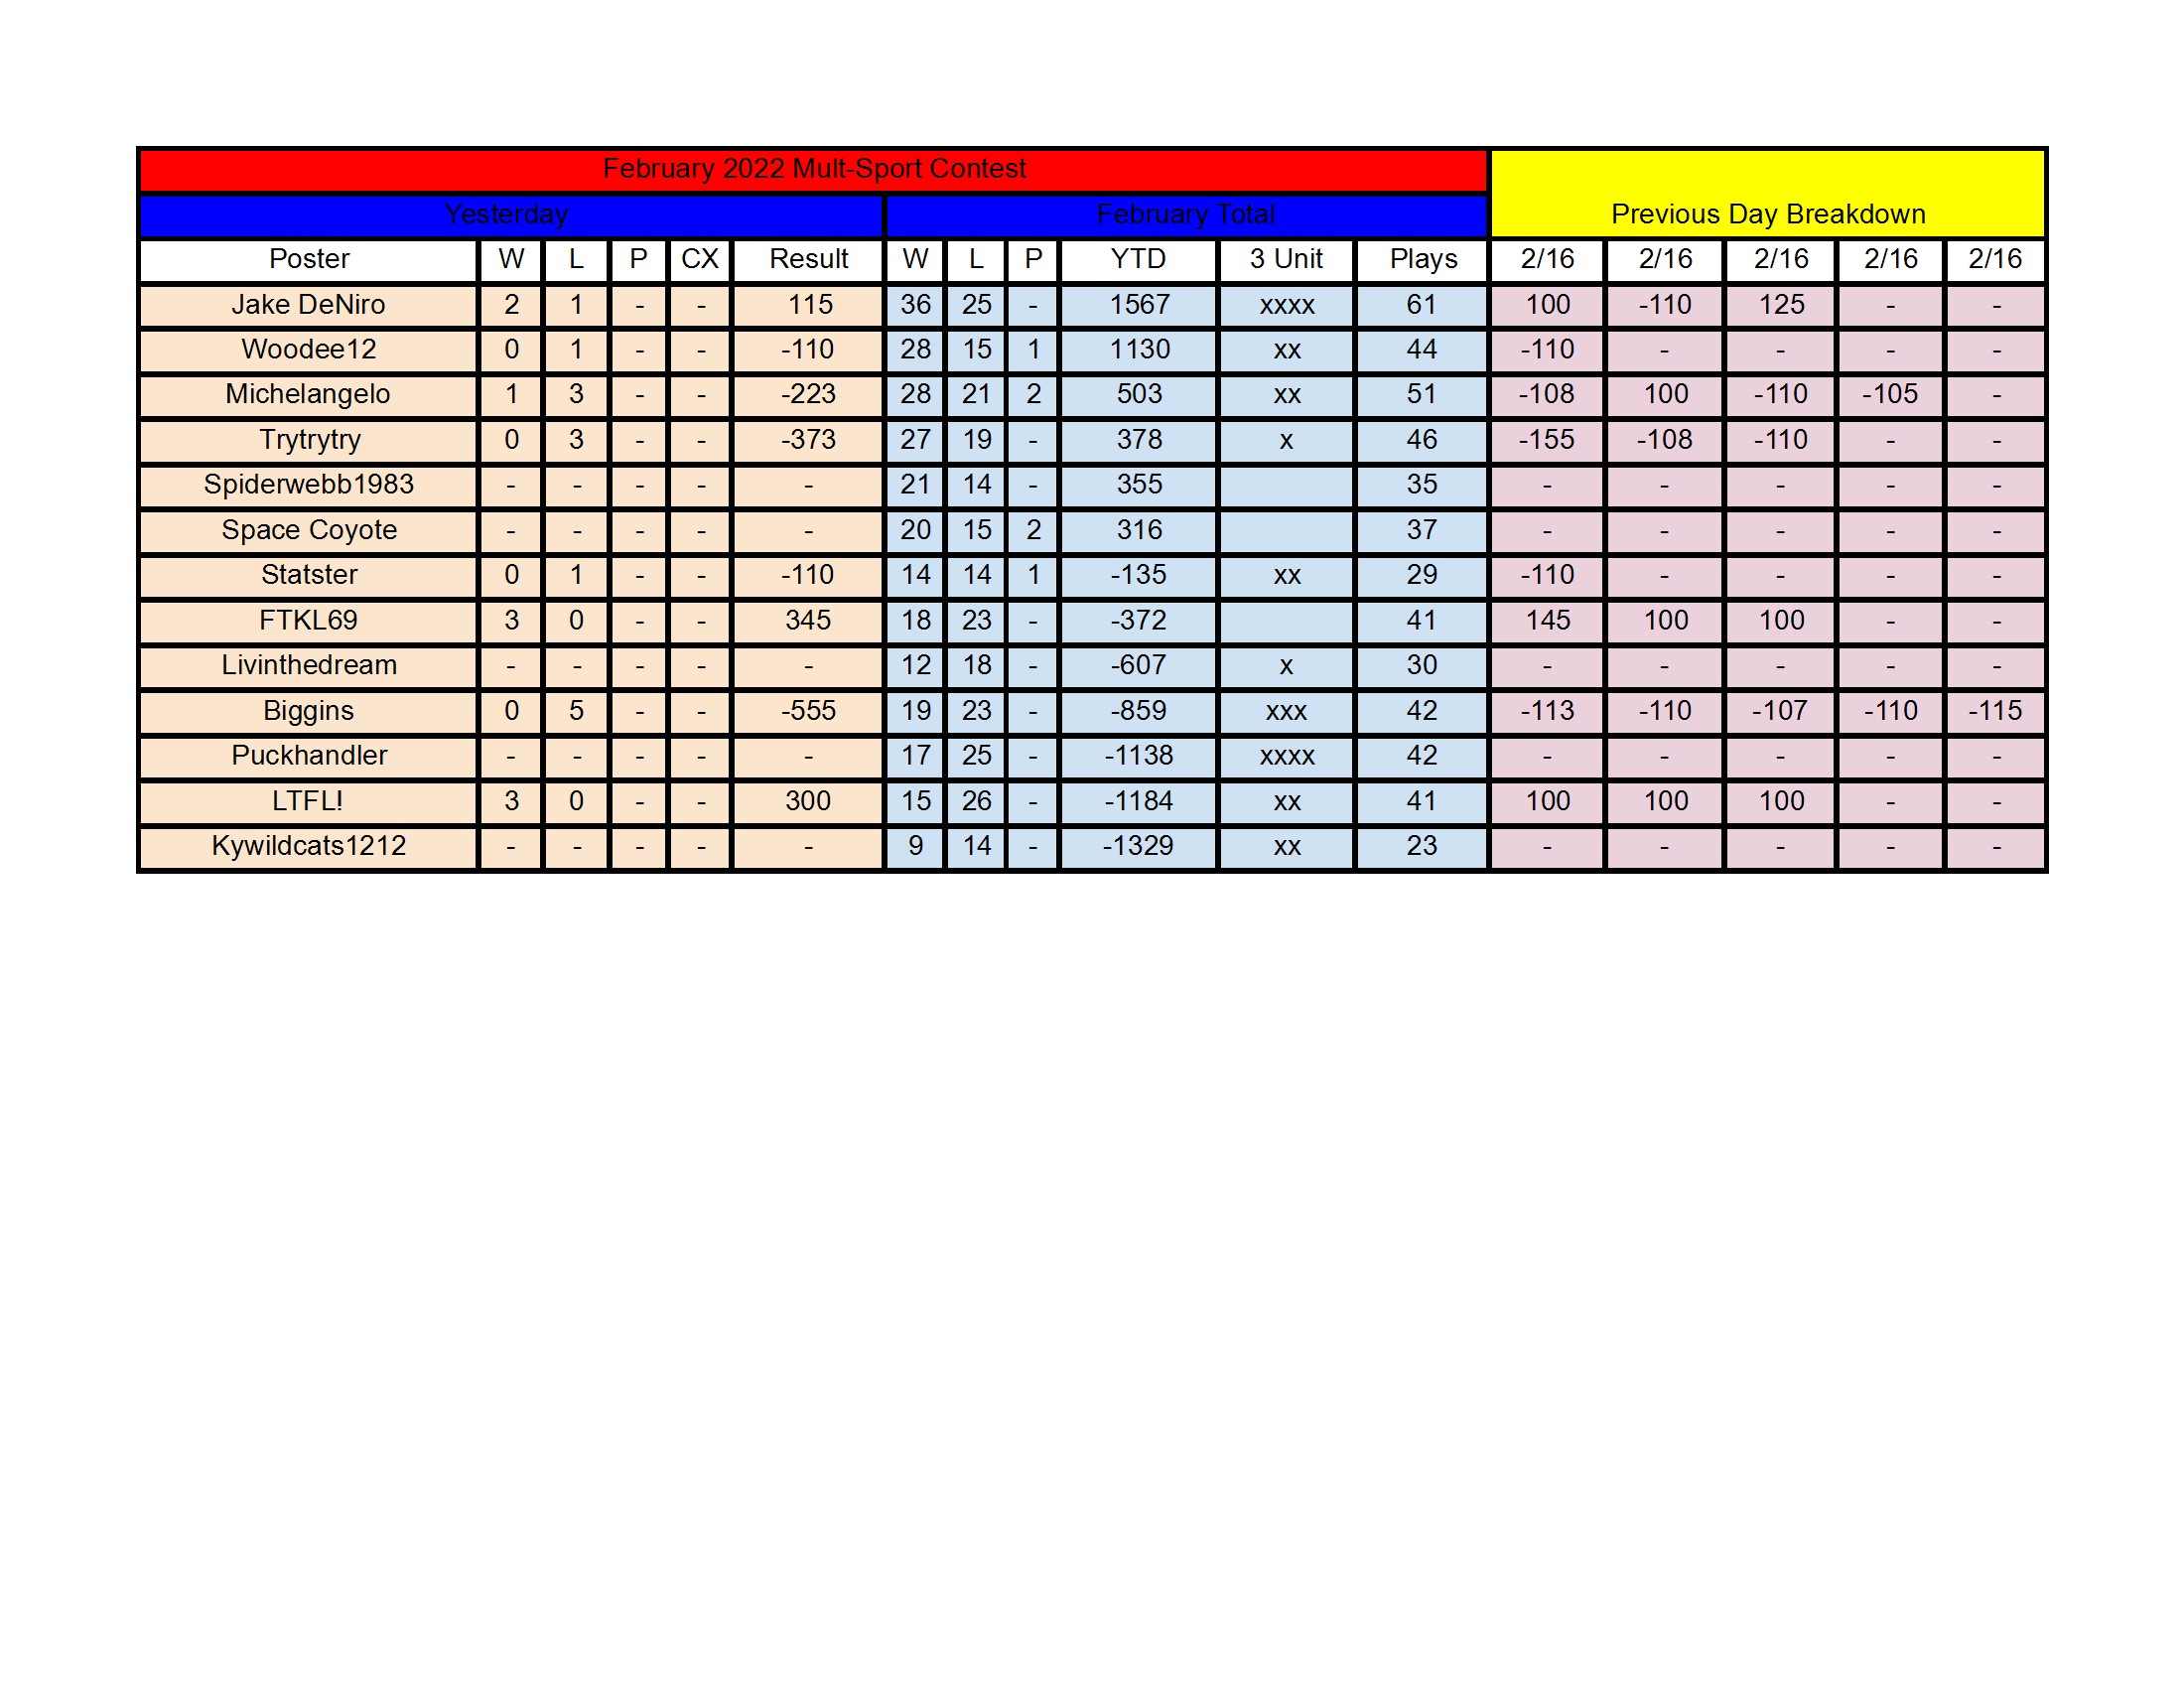 February Standings - 2_16 conv 1.jpeg